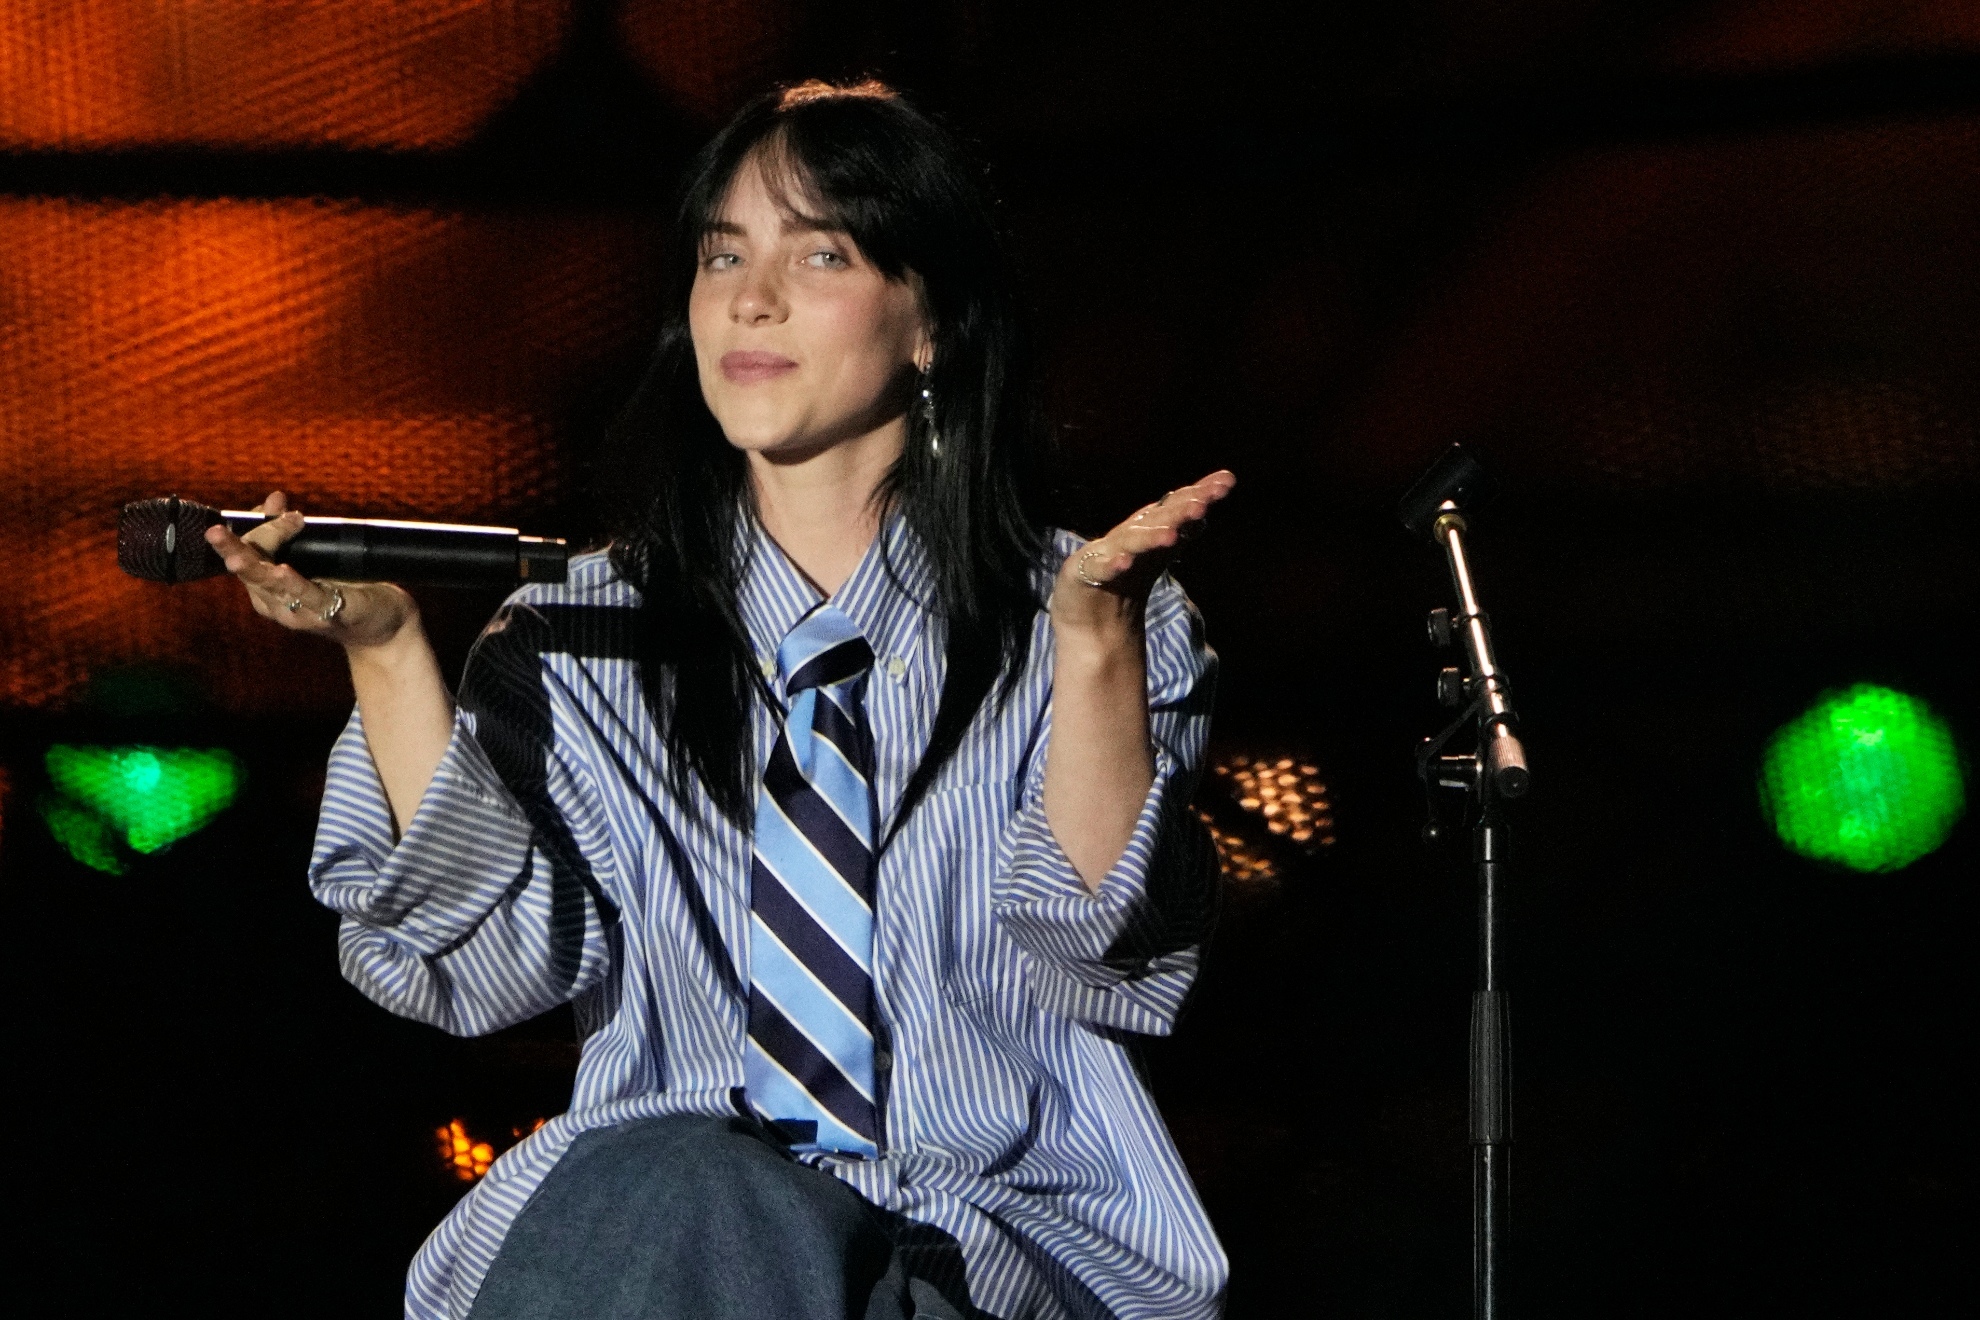 Billie Eilish during a concert